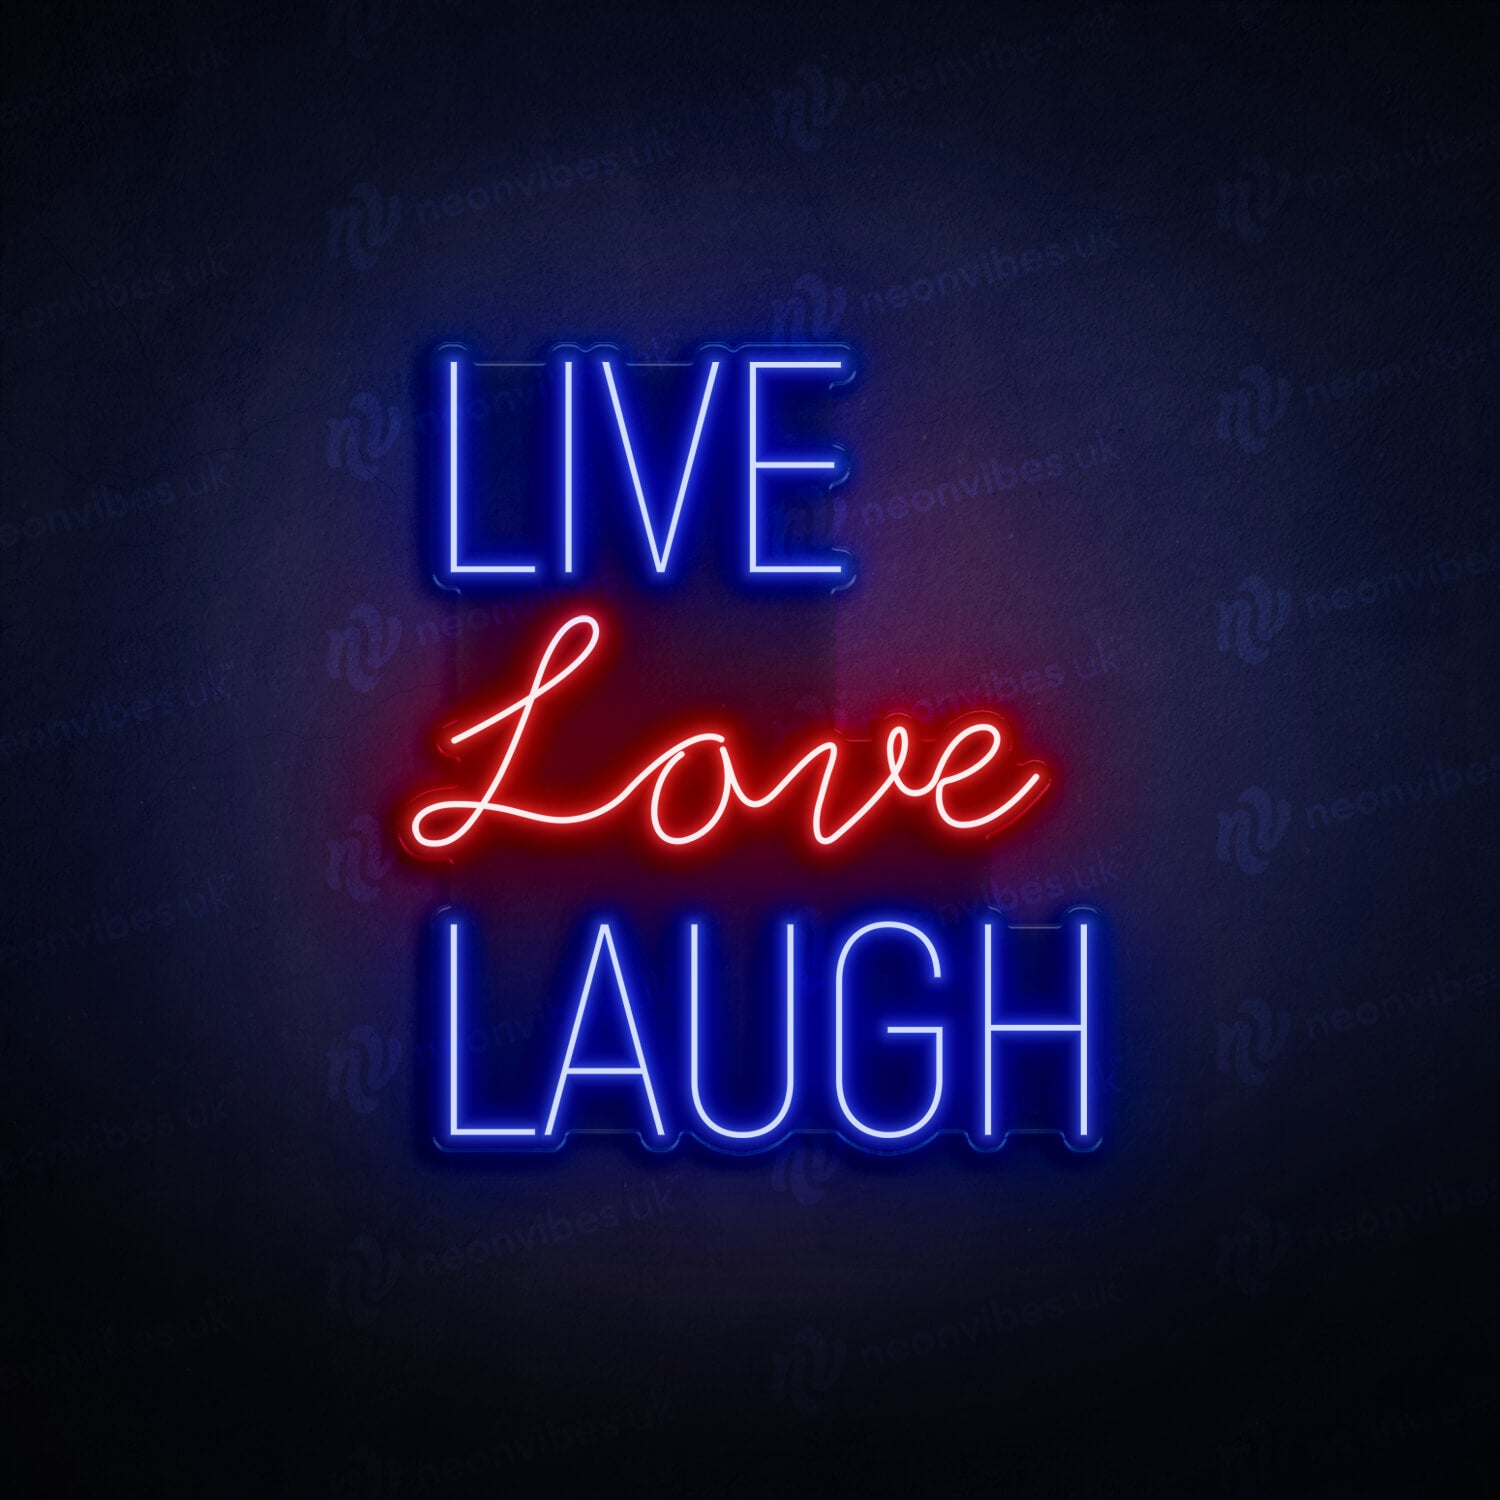 Live Love Laugh neon sign